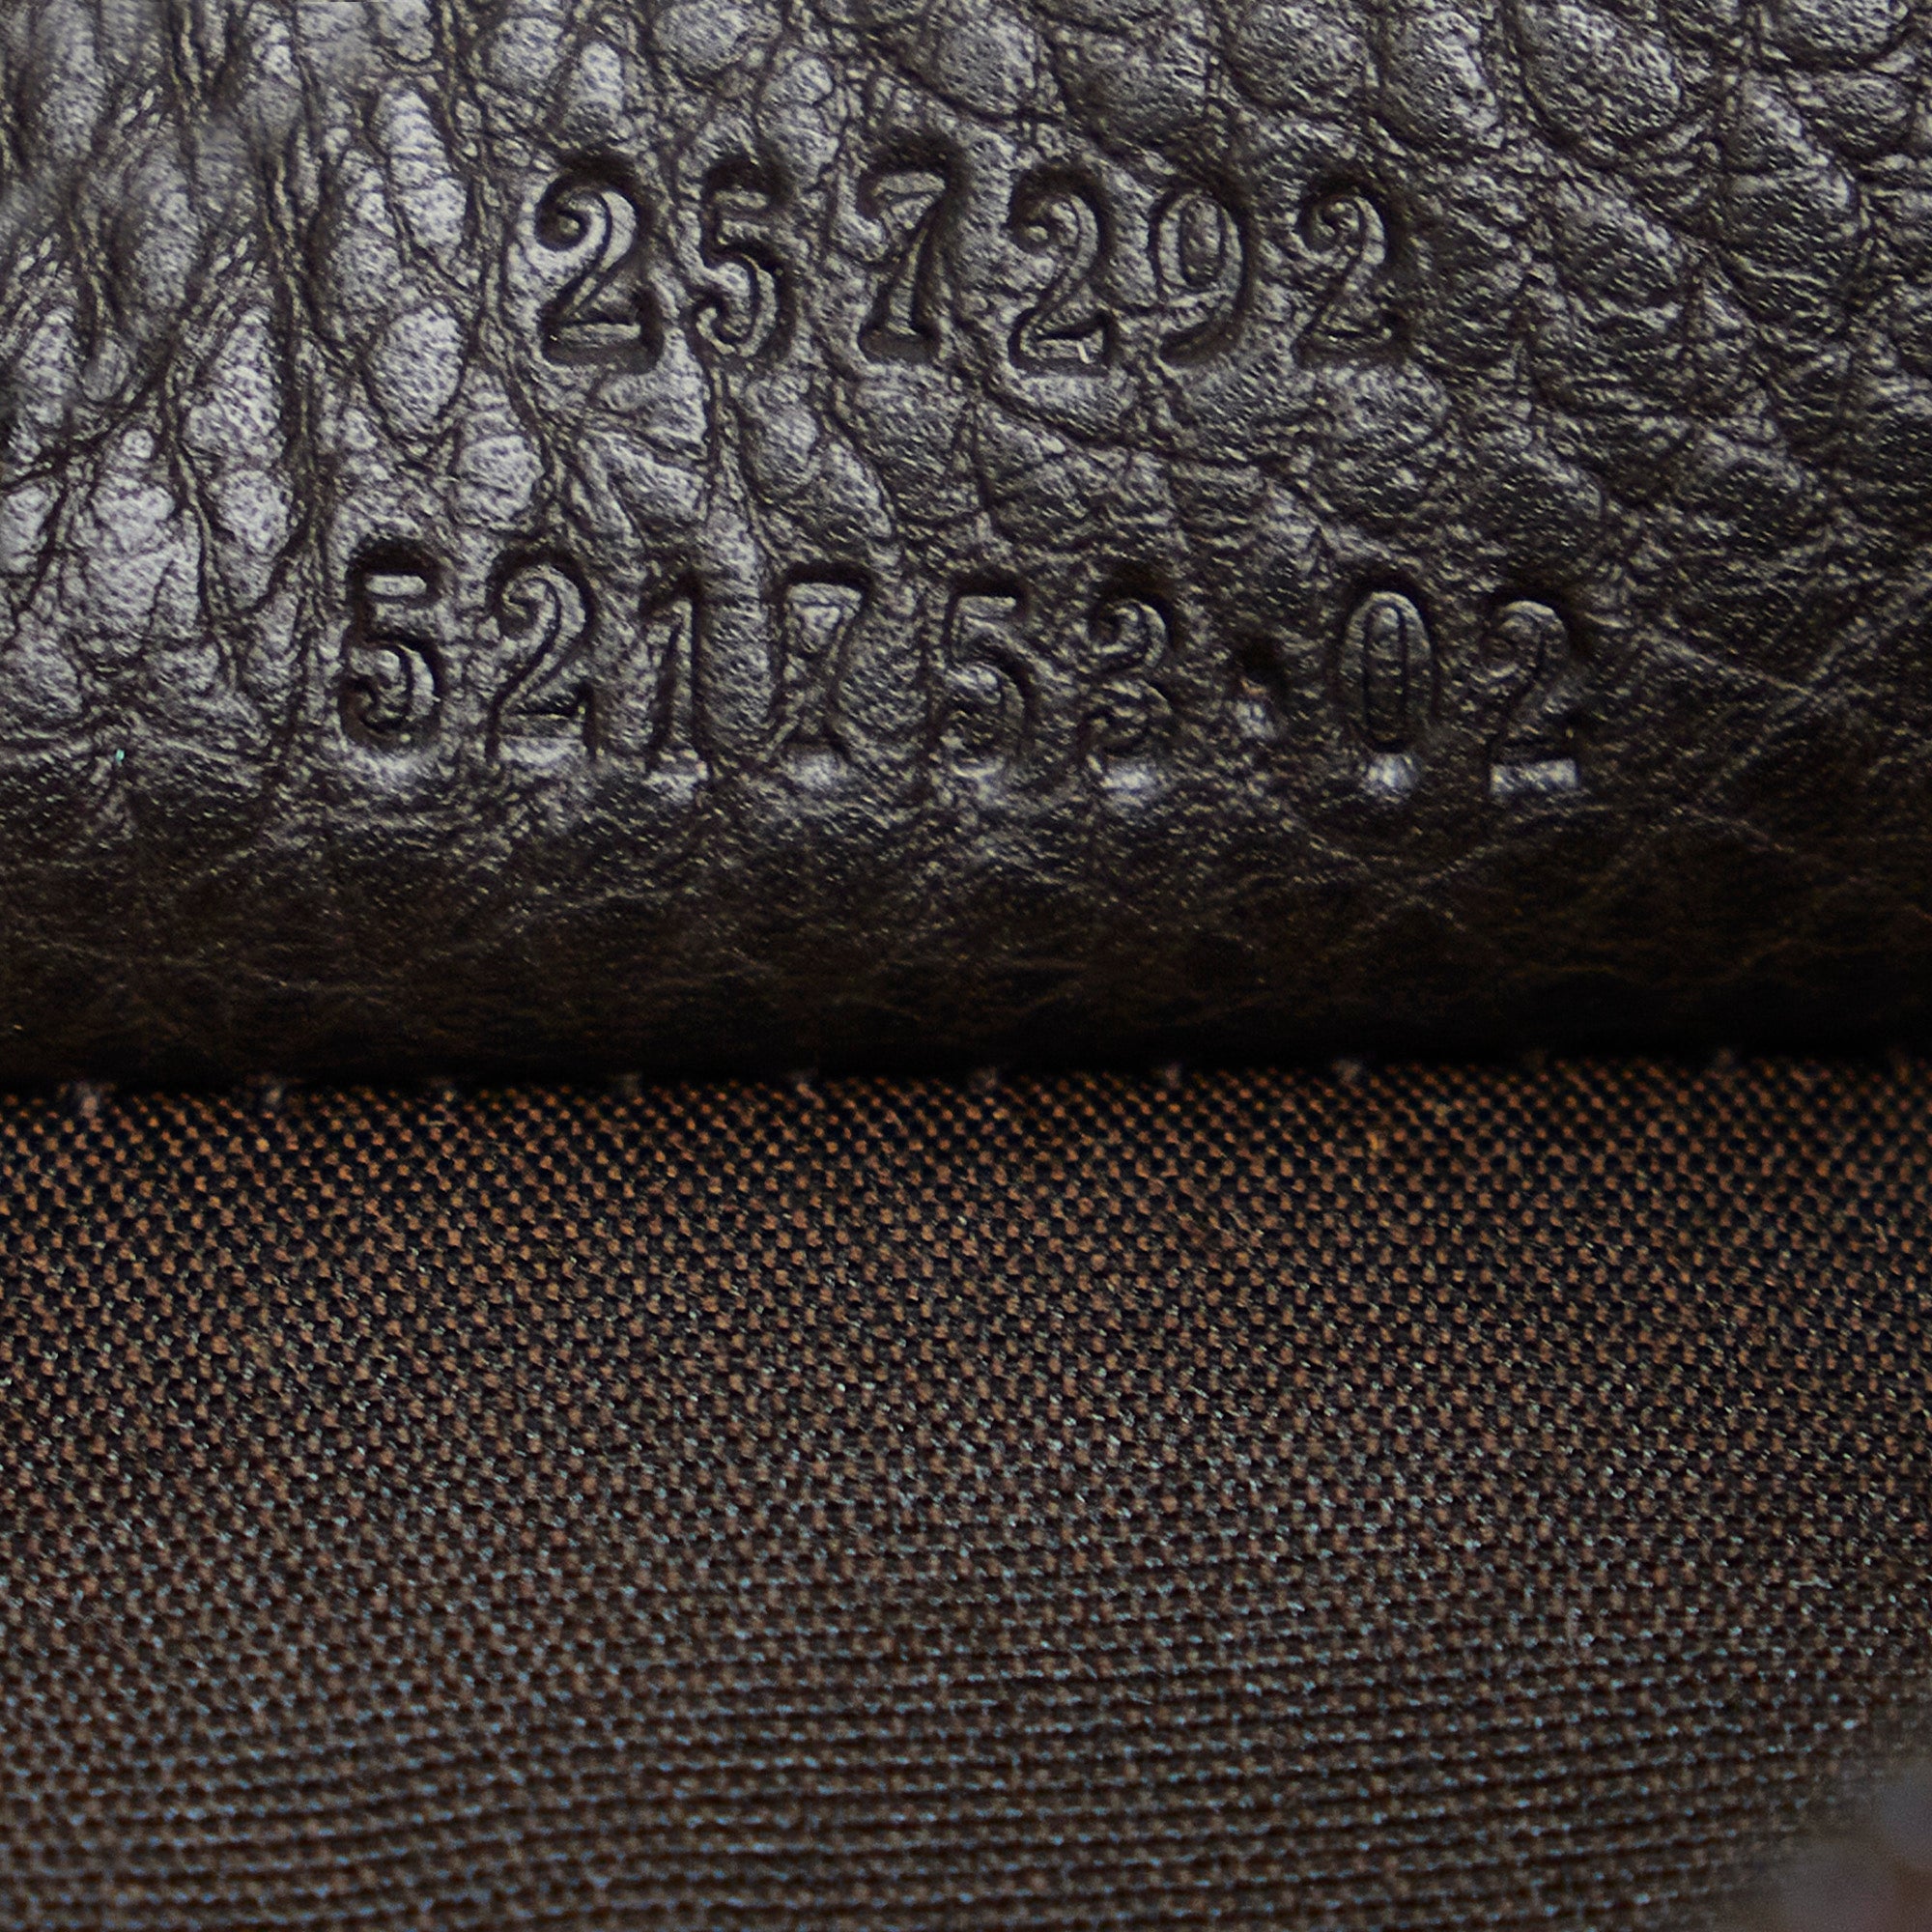 Gucci Monogram Web Reins Hobo Brown Canvas Shoulder Bag Leather